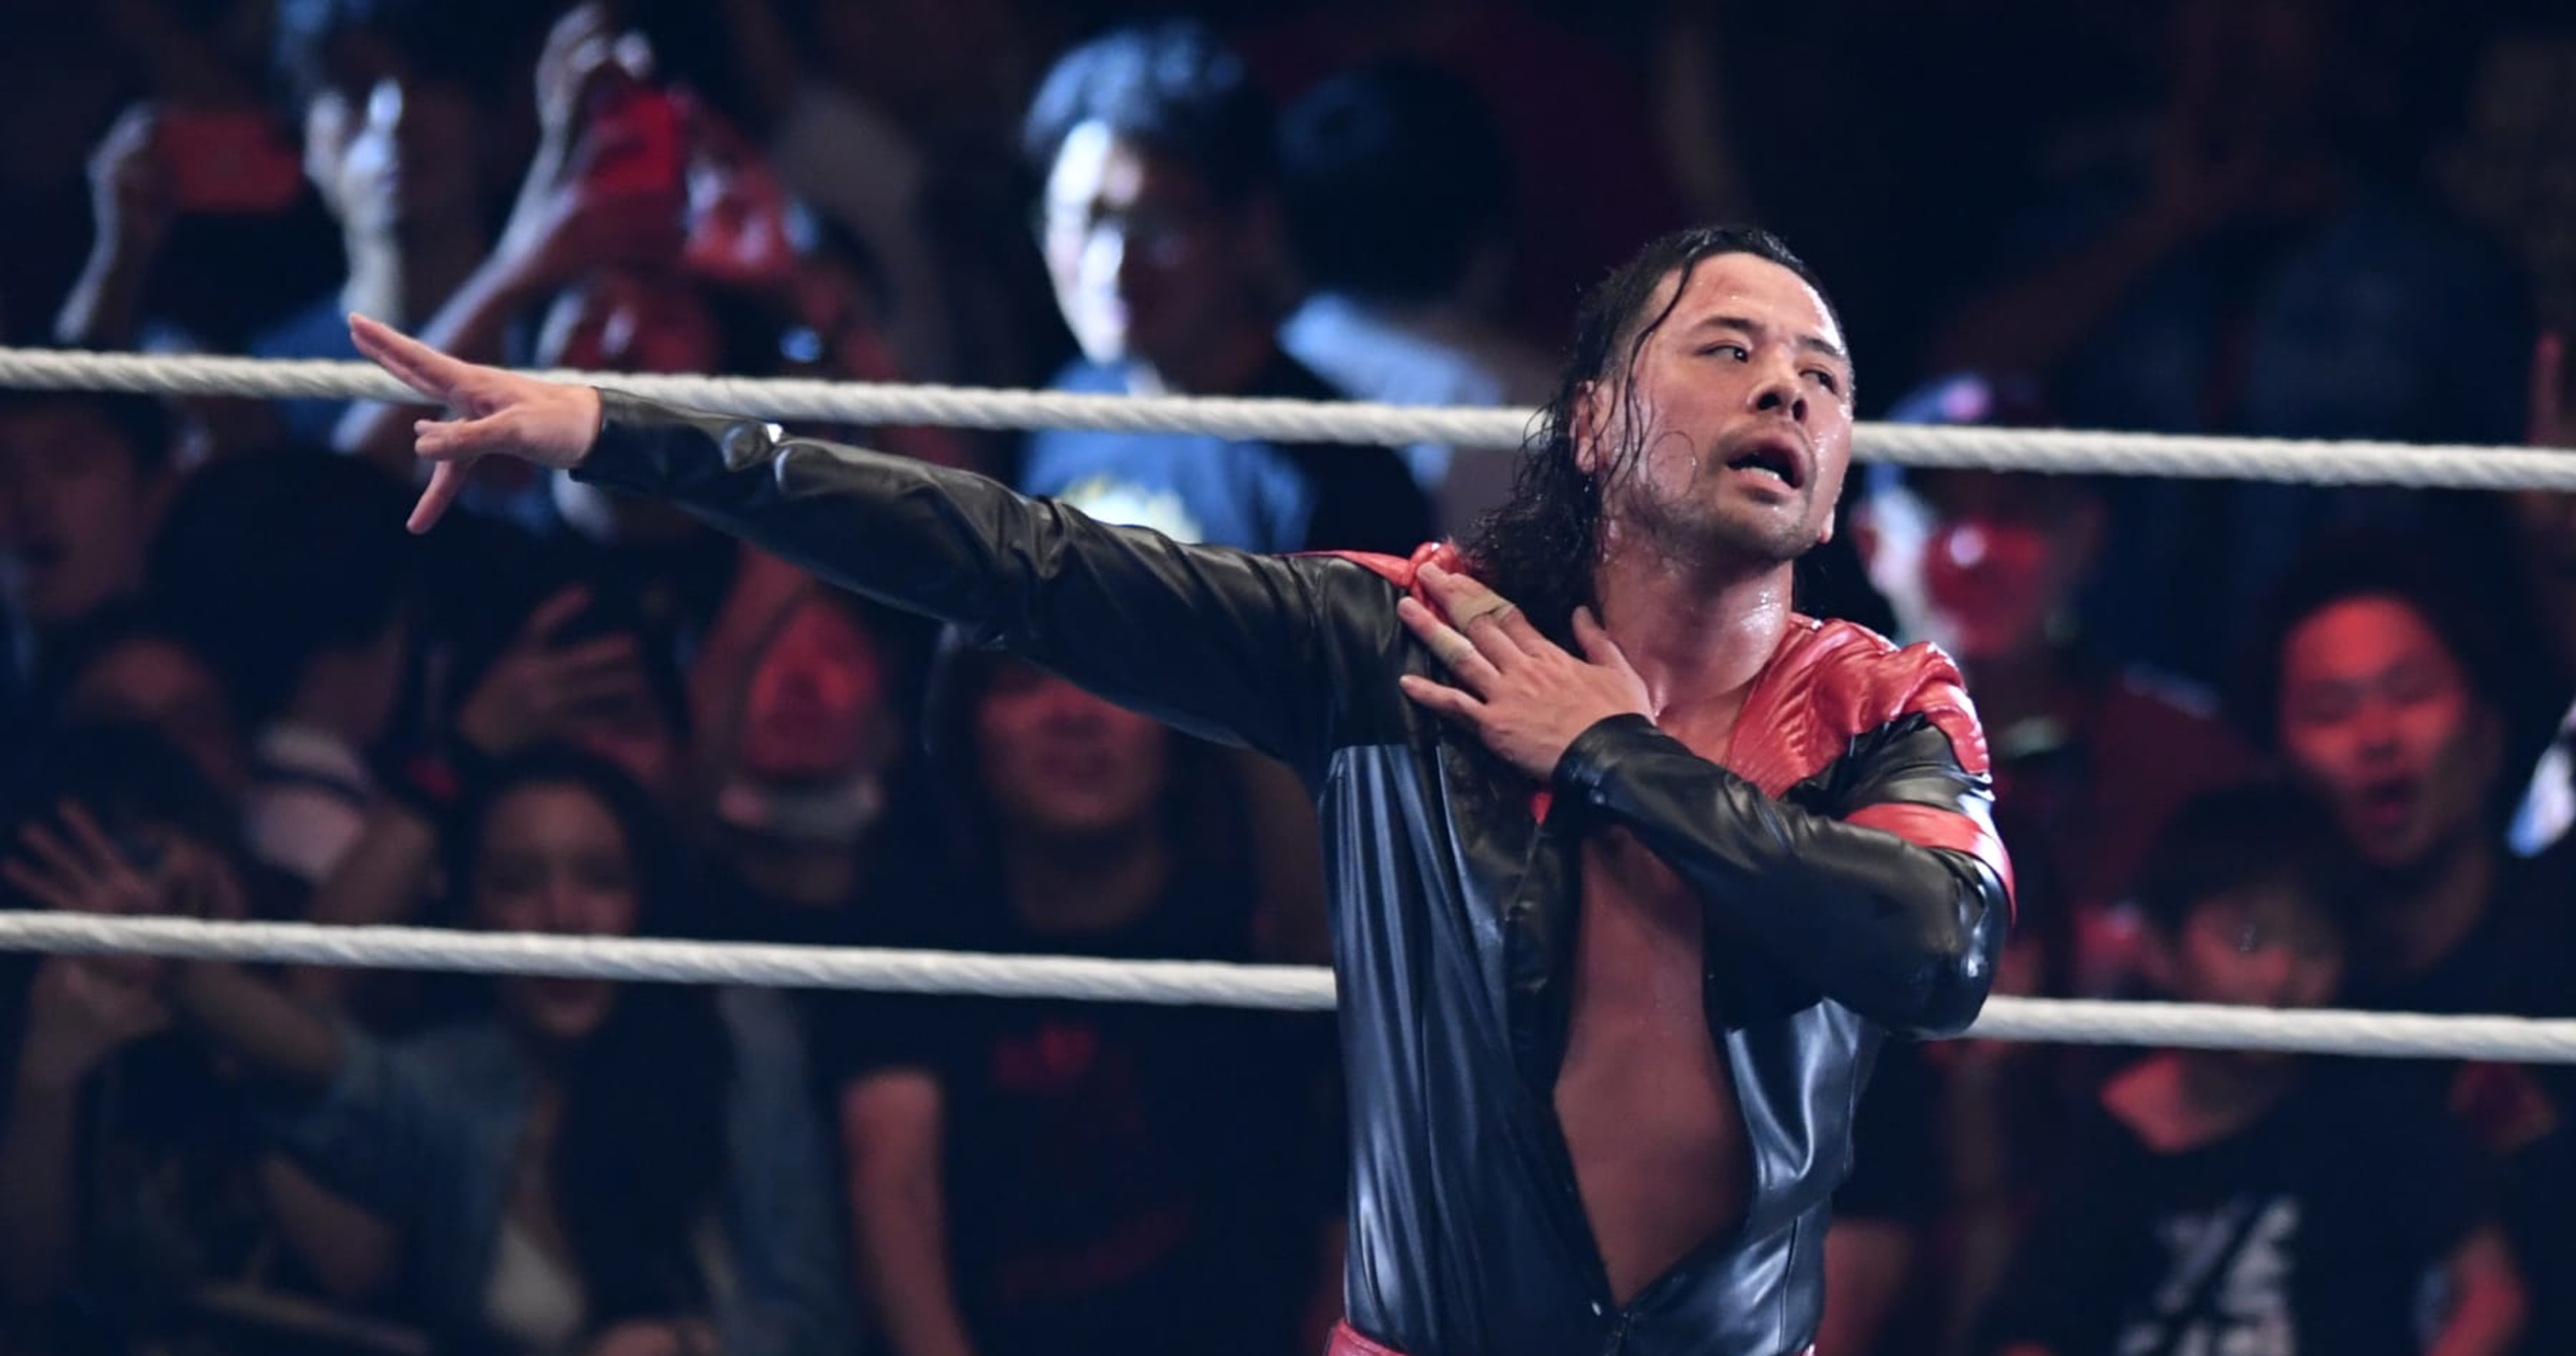 Shinsuke Nakamura vs. Great Muta Will Be Historic Moment in Wrestling, but a One-Off thumbnail